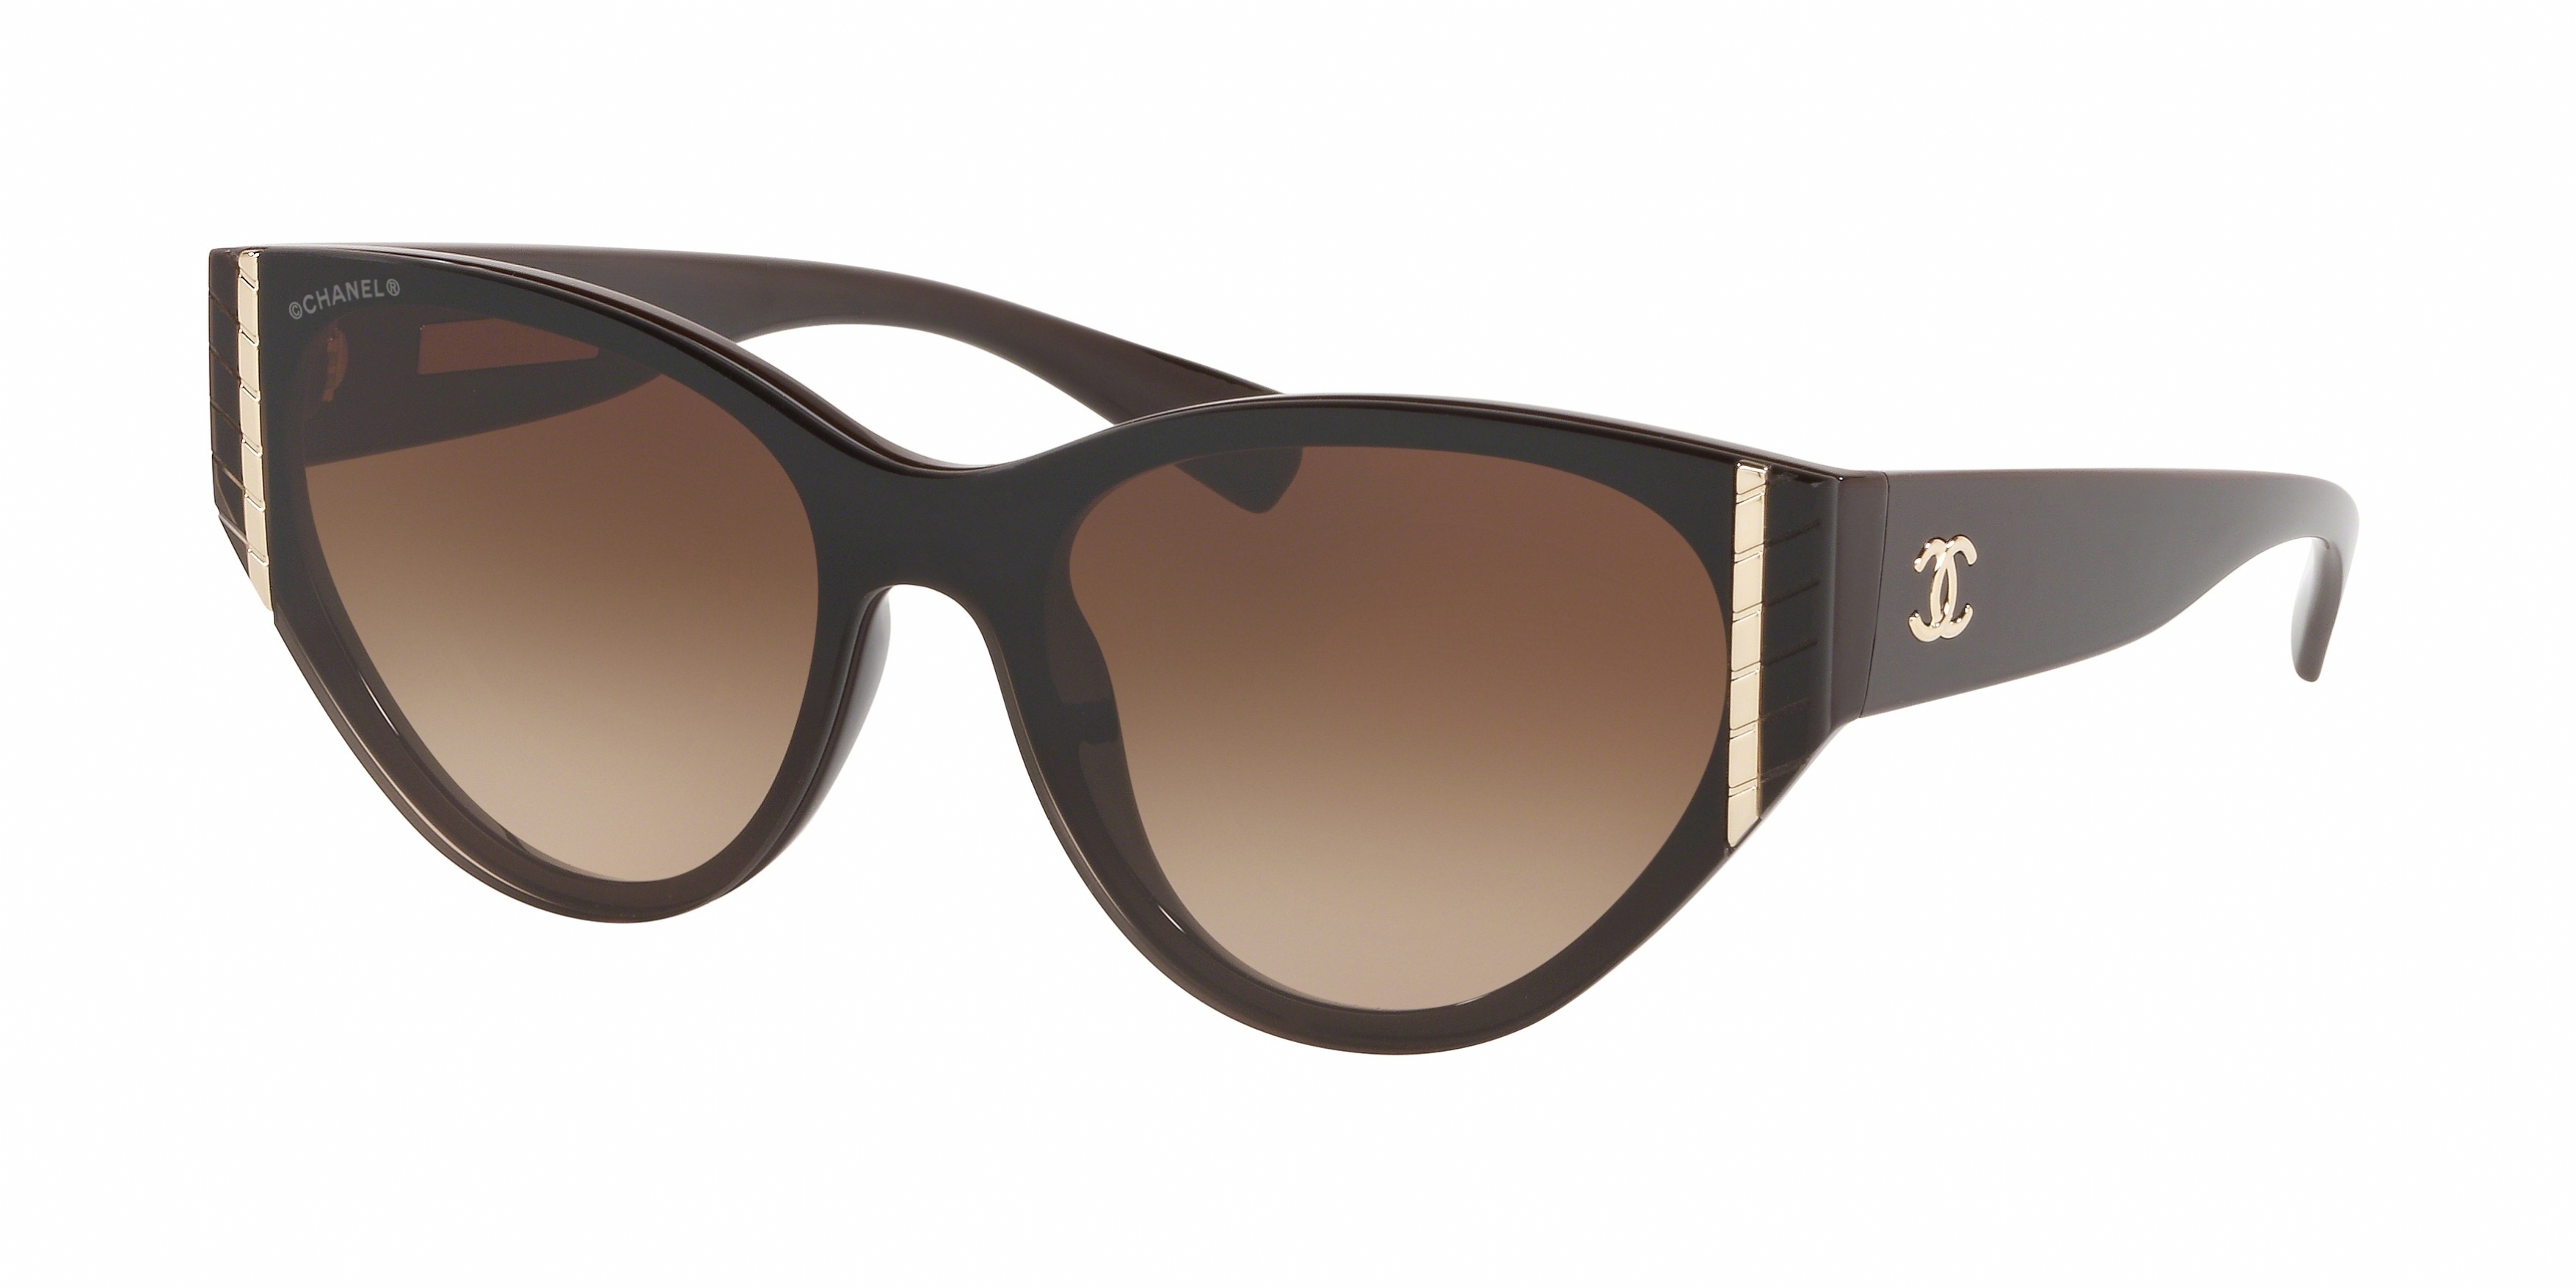 Chanel 6054 Sunglasses